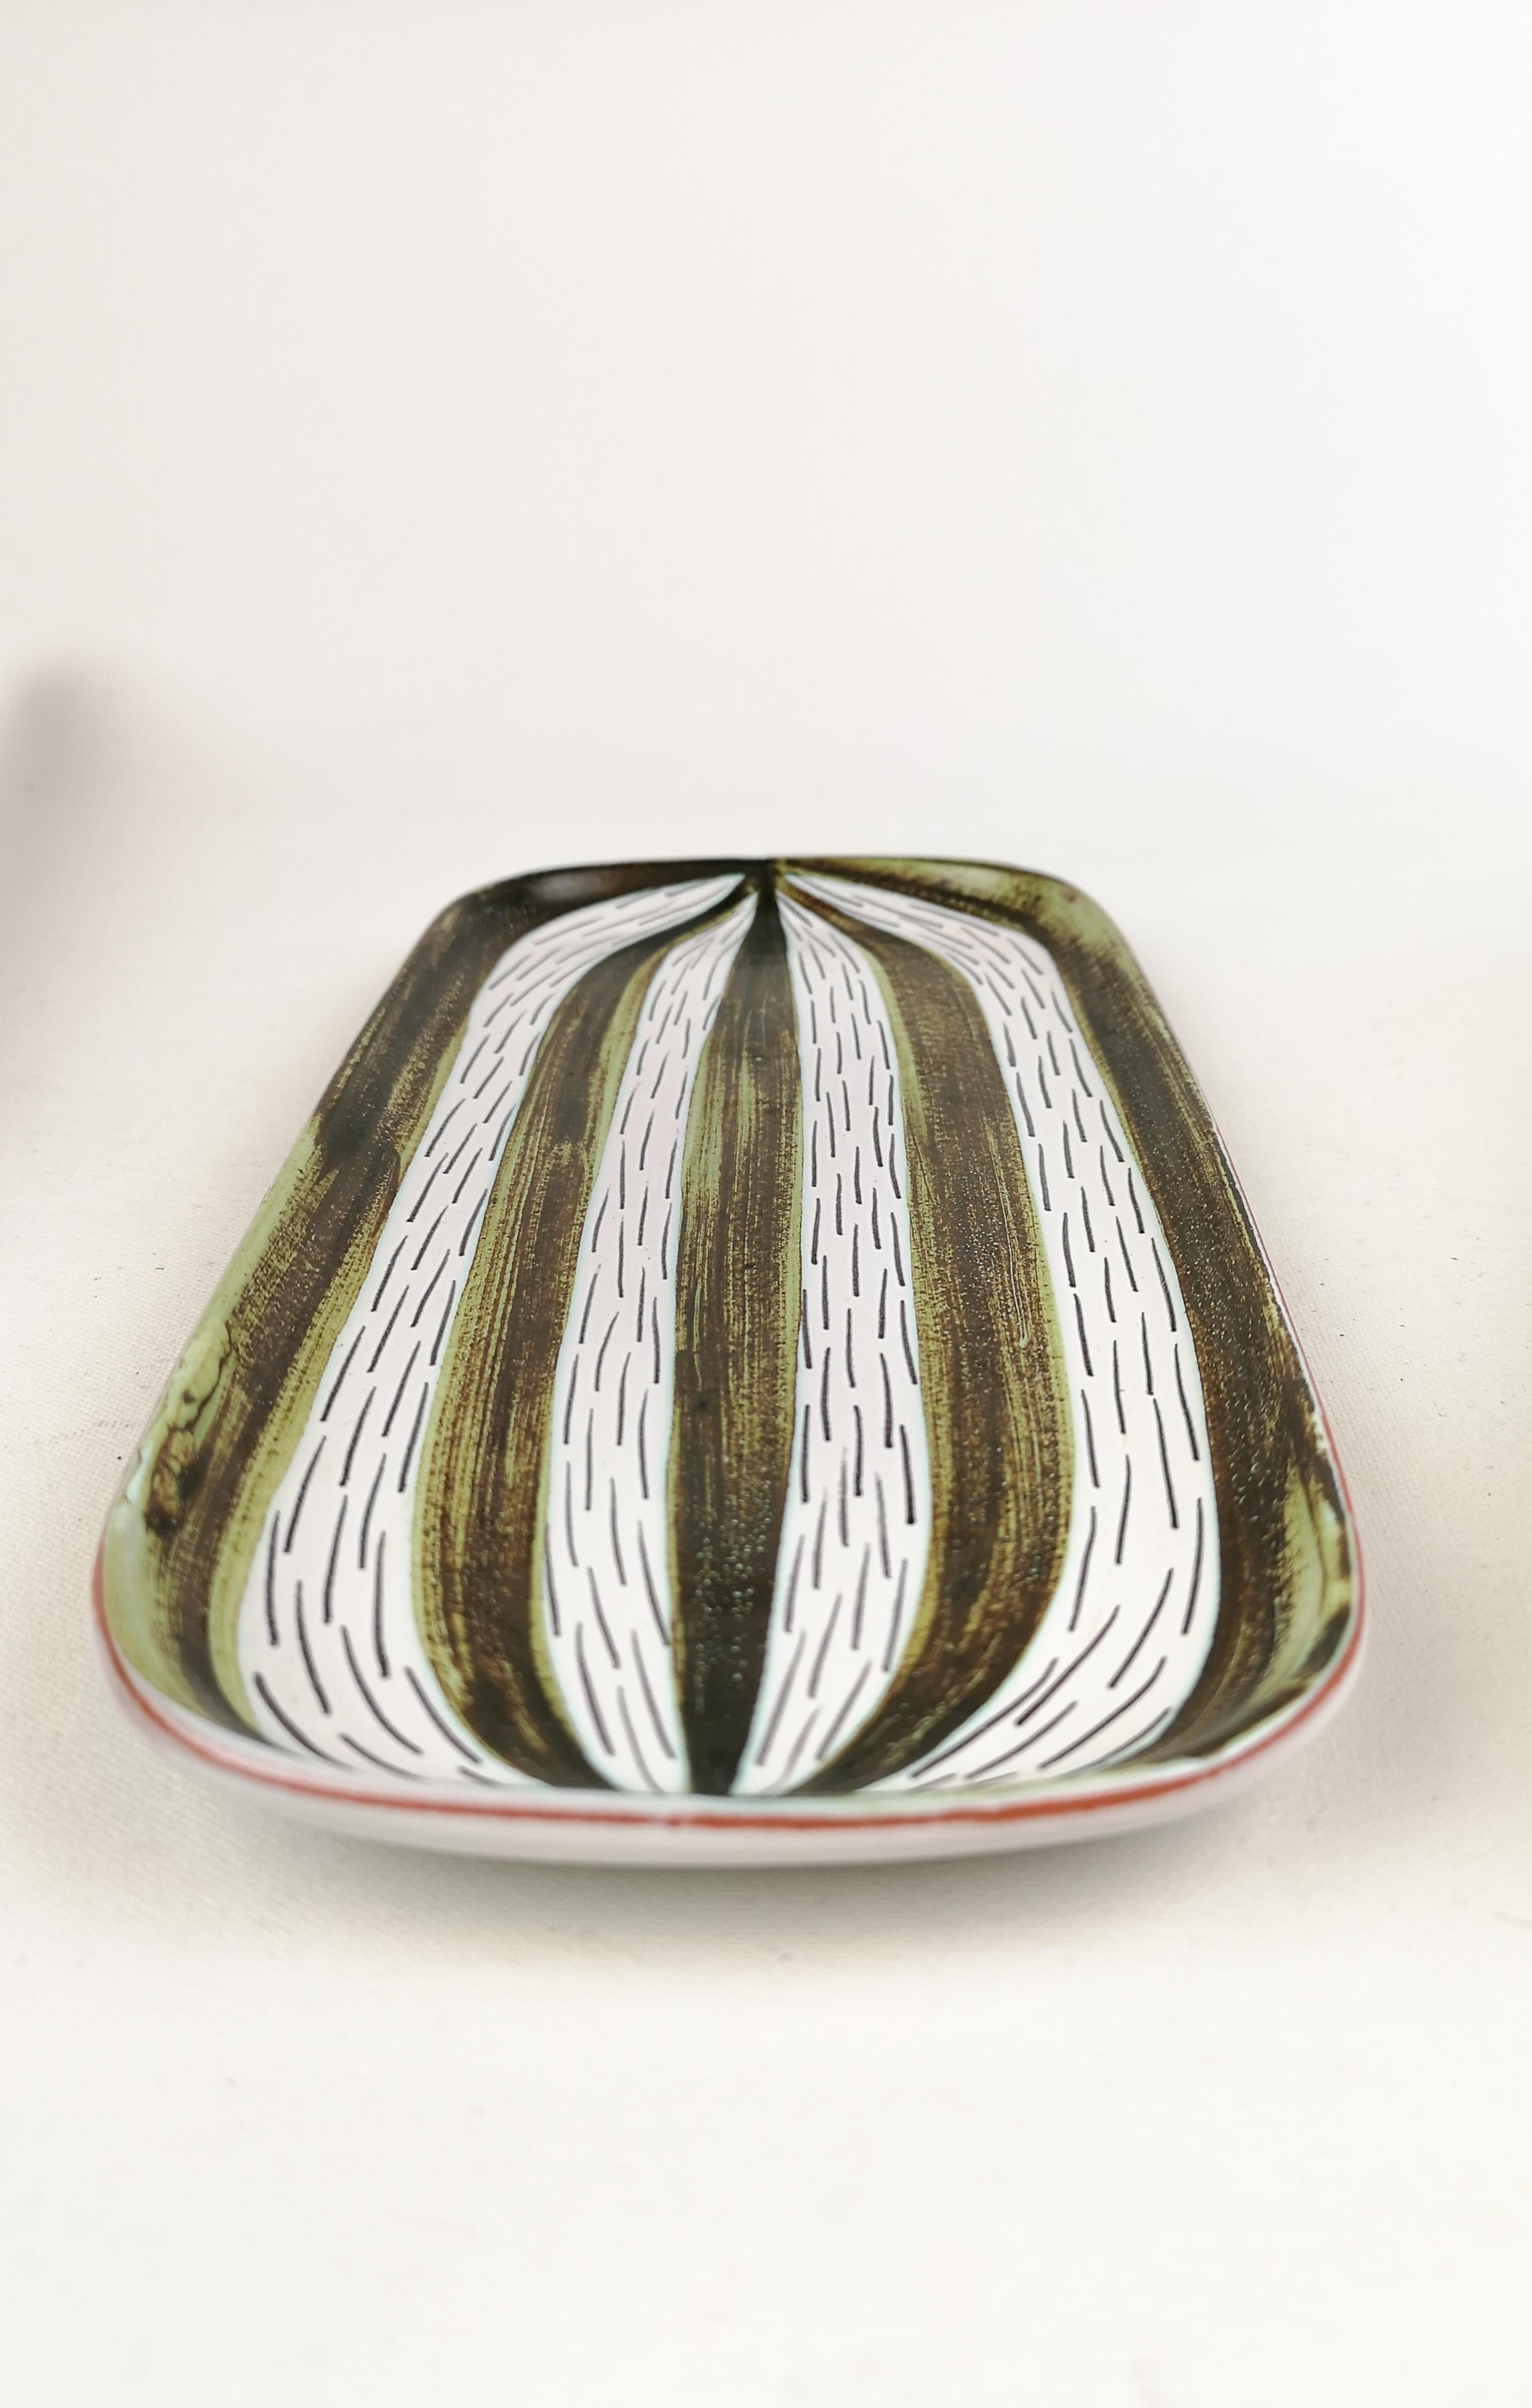 Ceramics Bowls by Stig Lindberg, Gustavsberg Sweden, circa 1950 (Keramik)